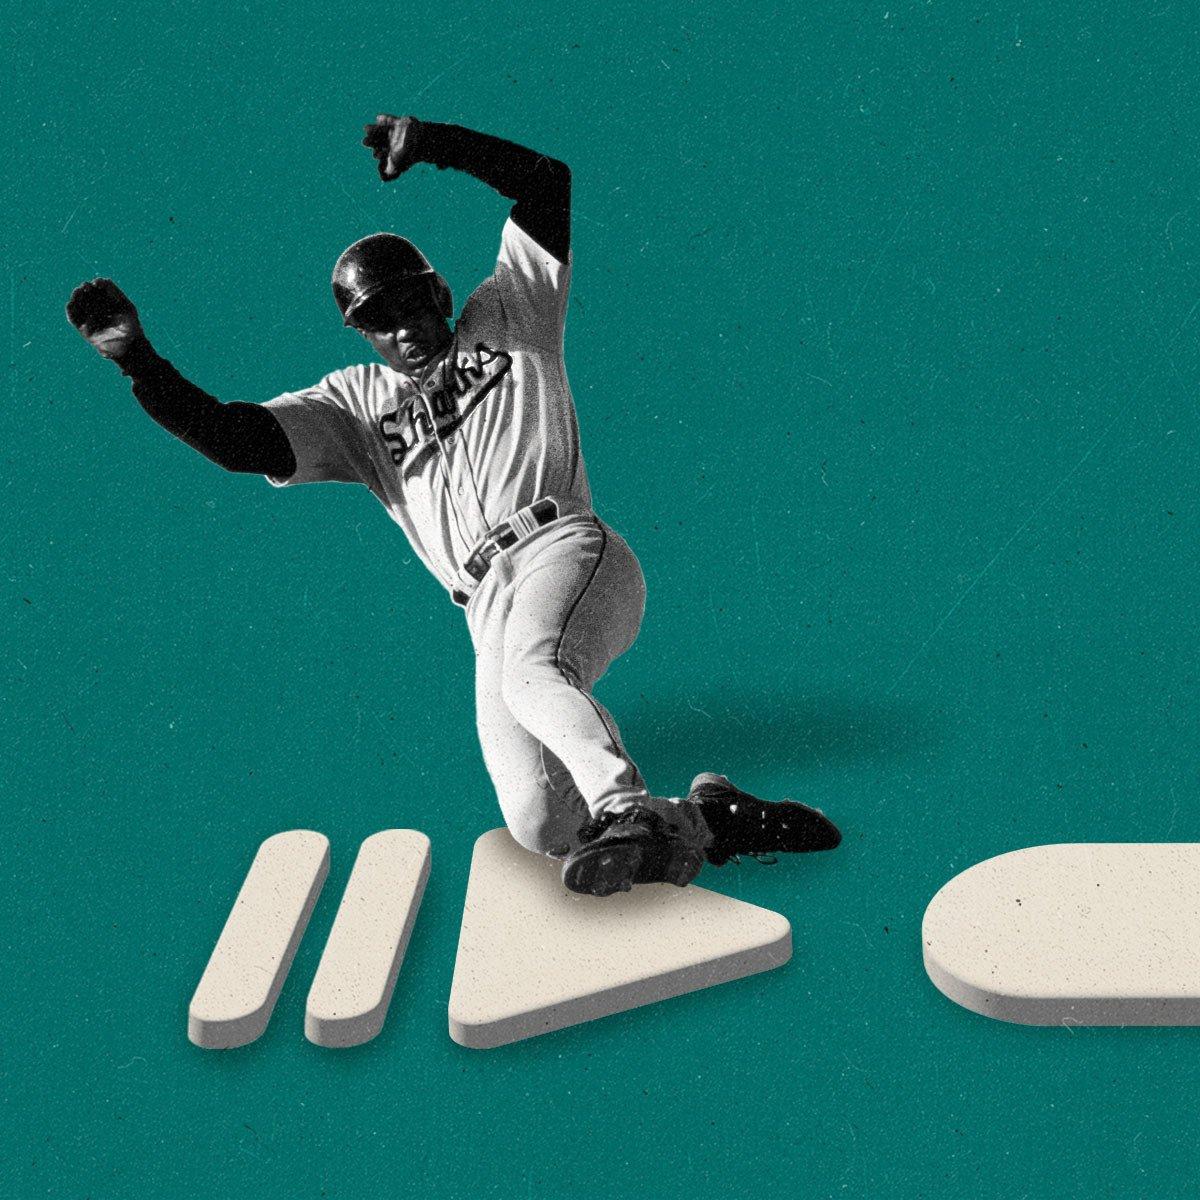 Baseball player sliding home onto a 3 dimensional play button.